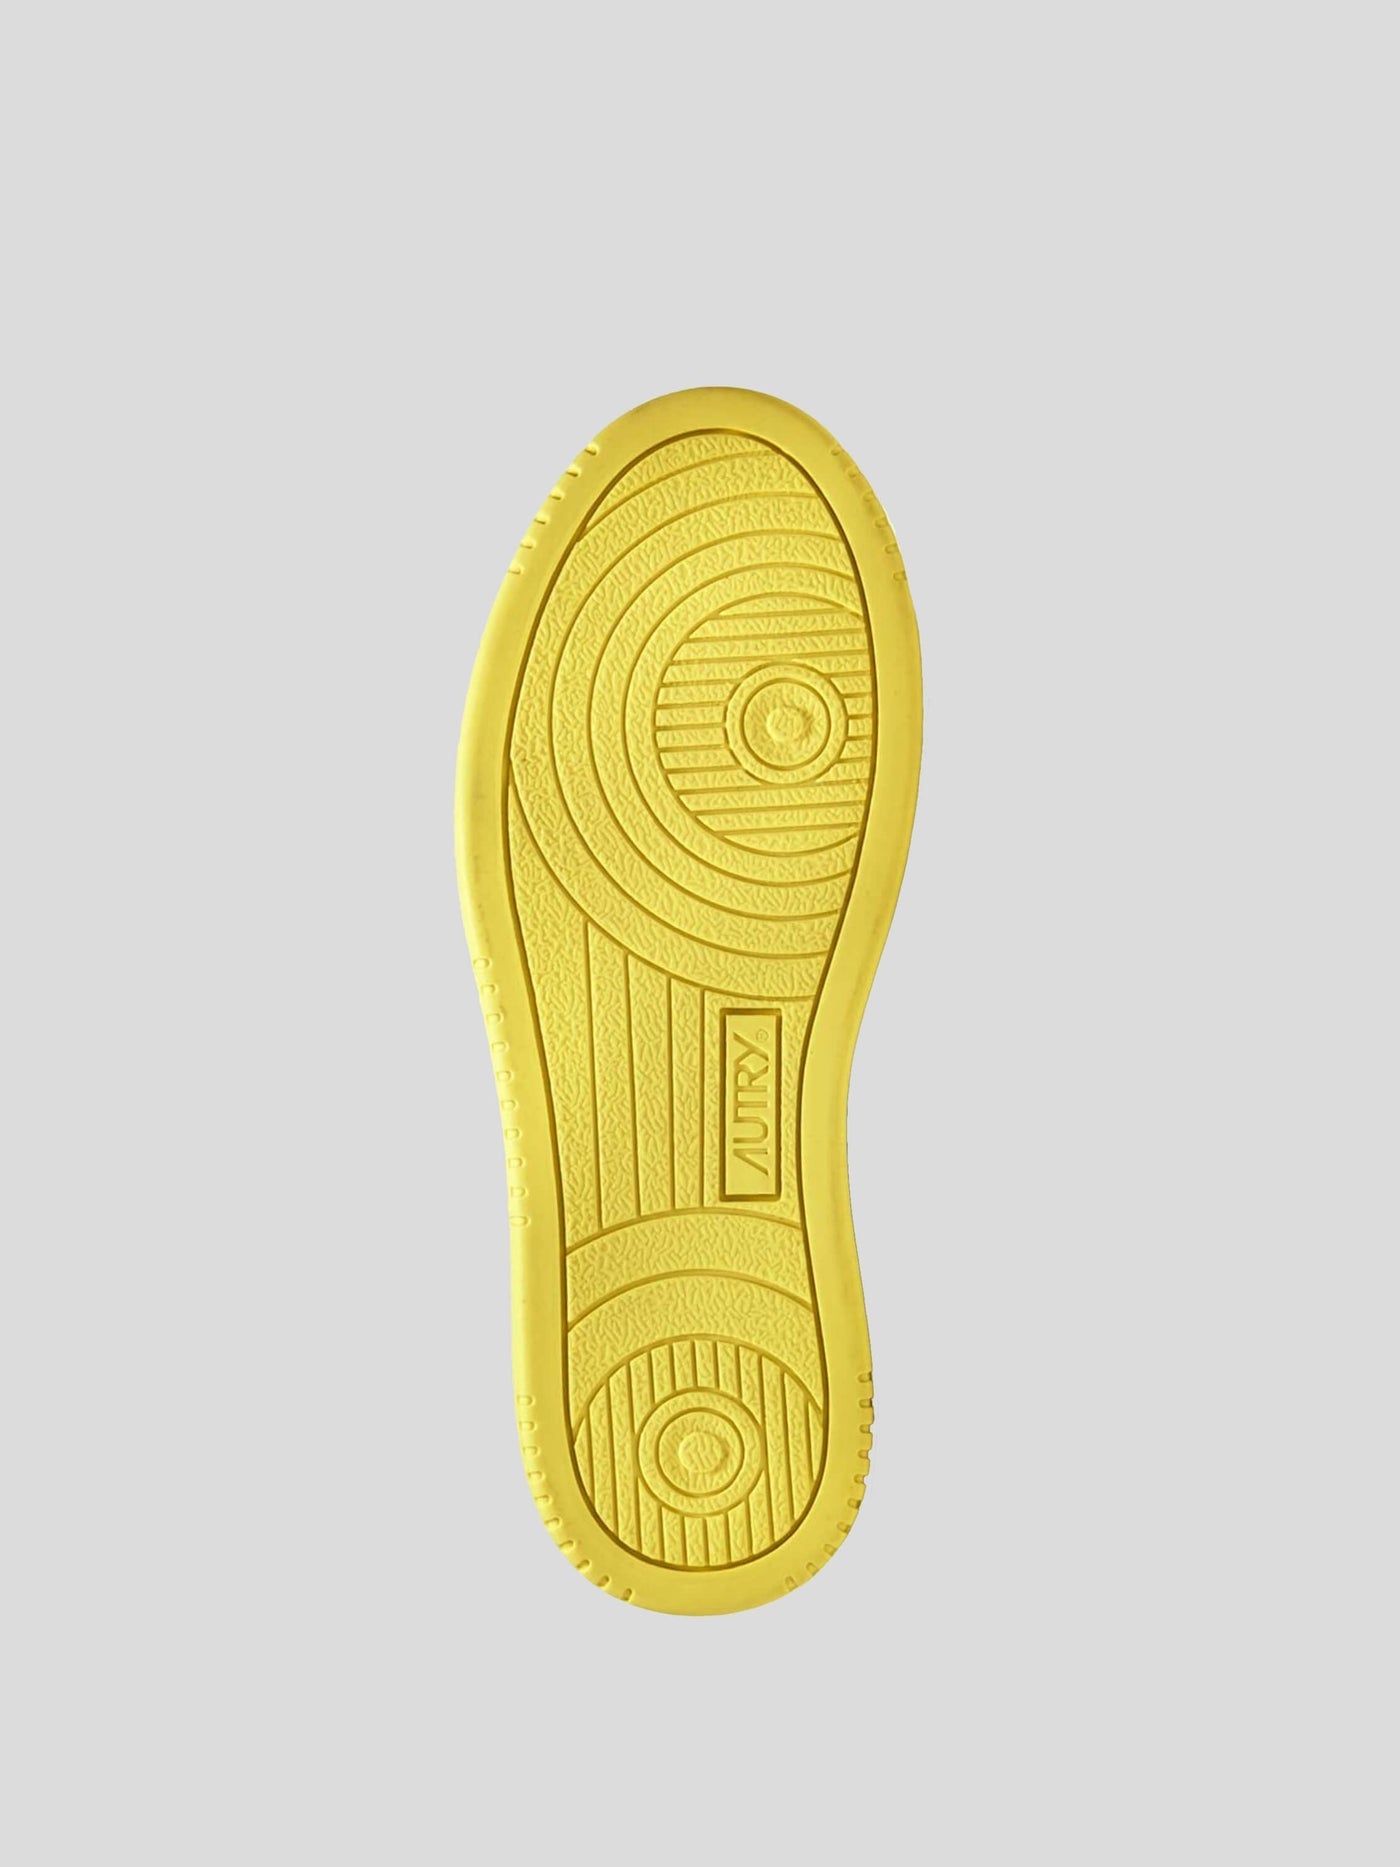 Autry Sneaker | Mid Top Sneaker Medalist AUMM WB23 gelb | AUMM WB23 yellow / ADAM/EVE